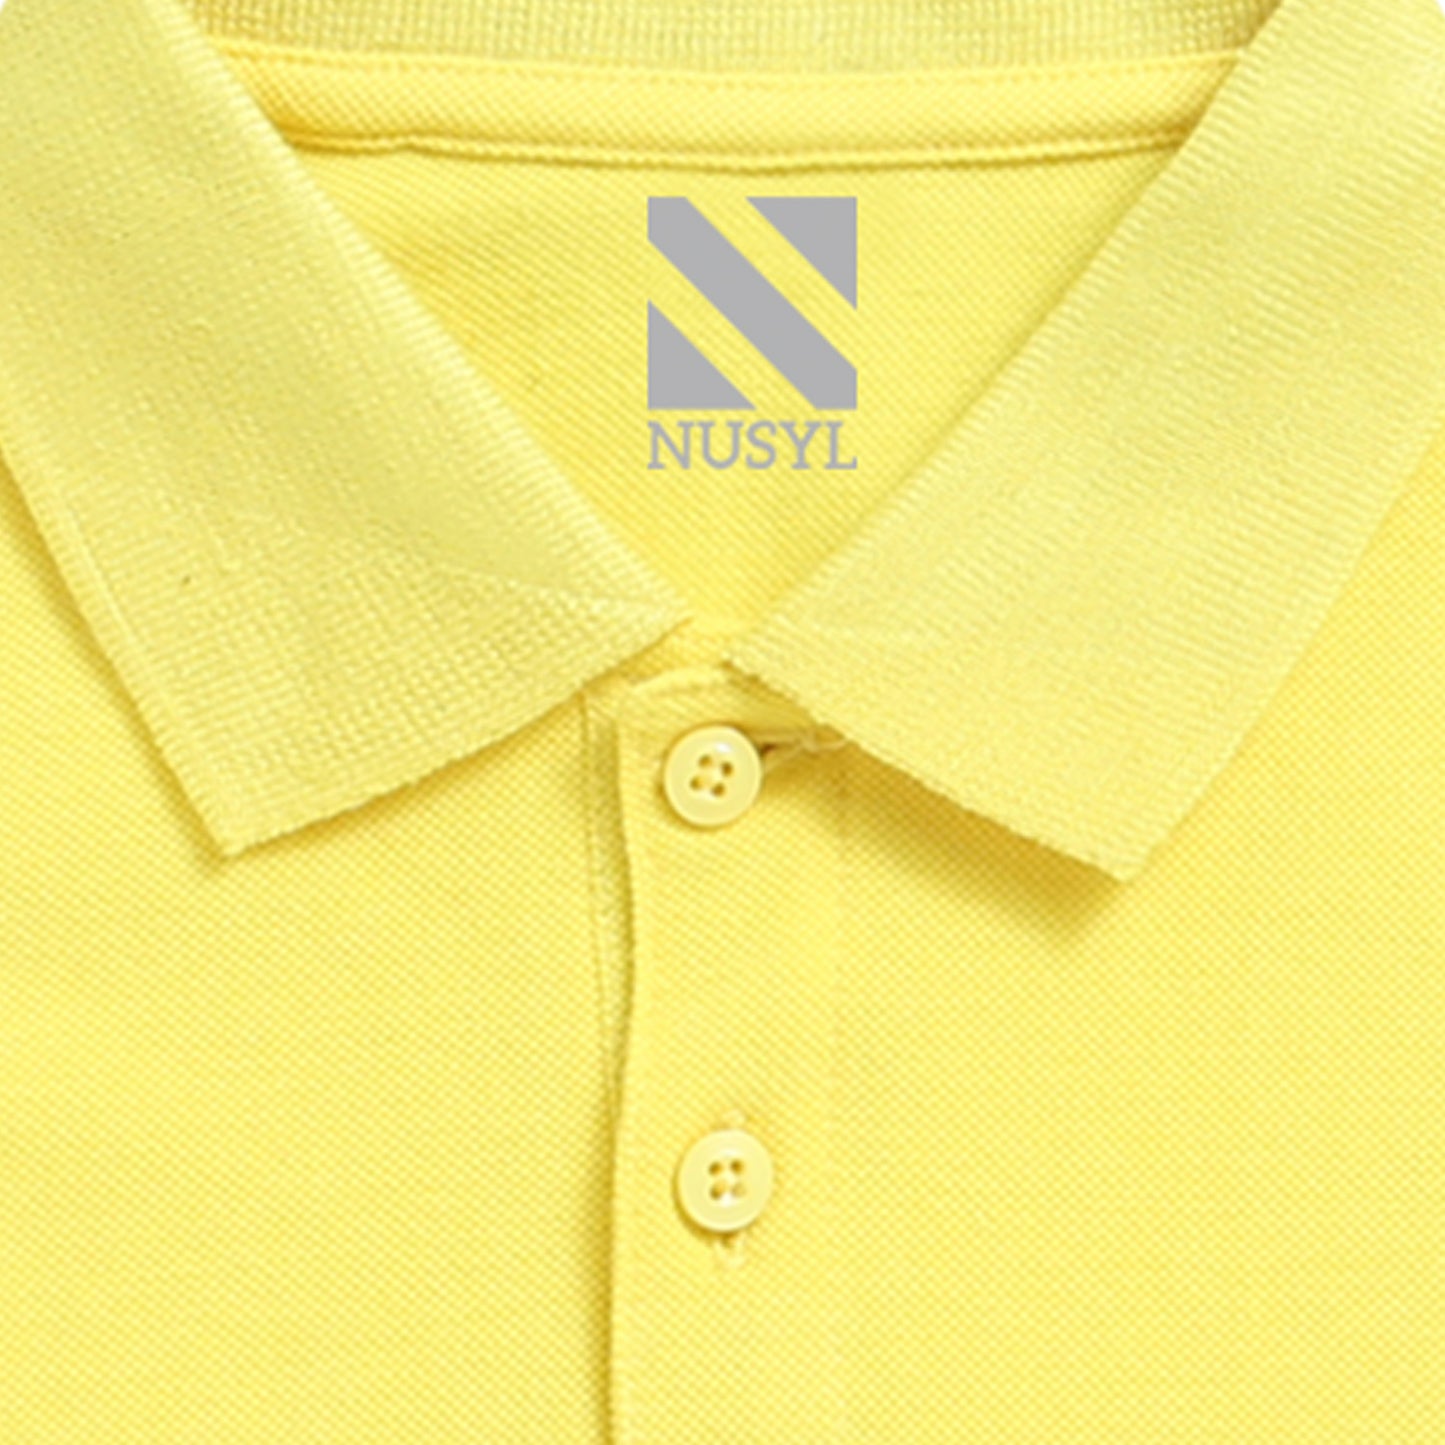 Nusyl Elephant Printed Bright Yellow Infants Polo T-shirt